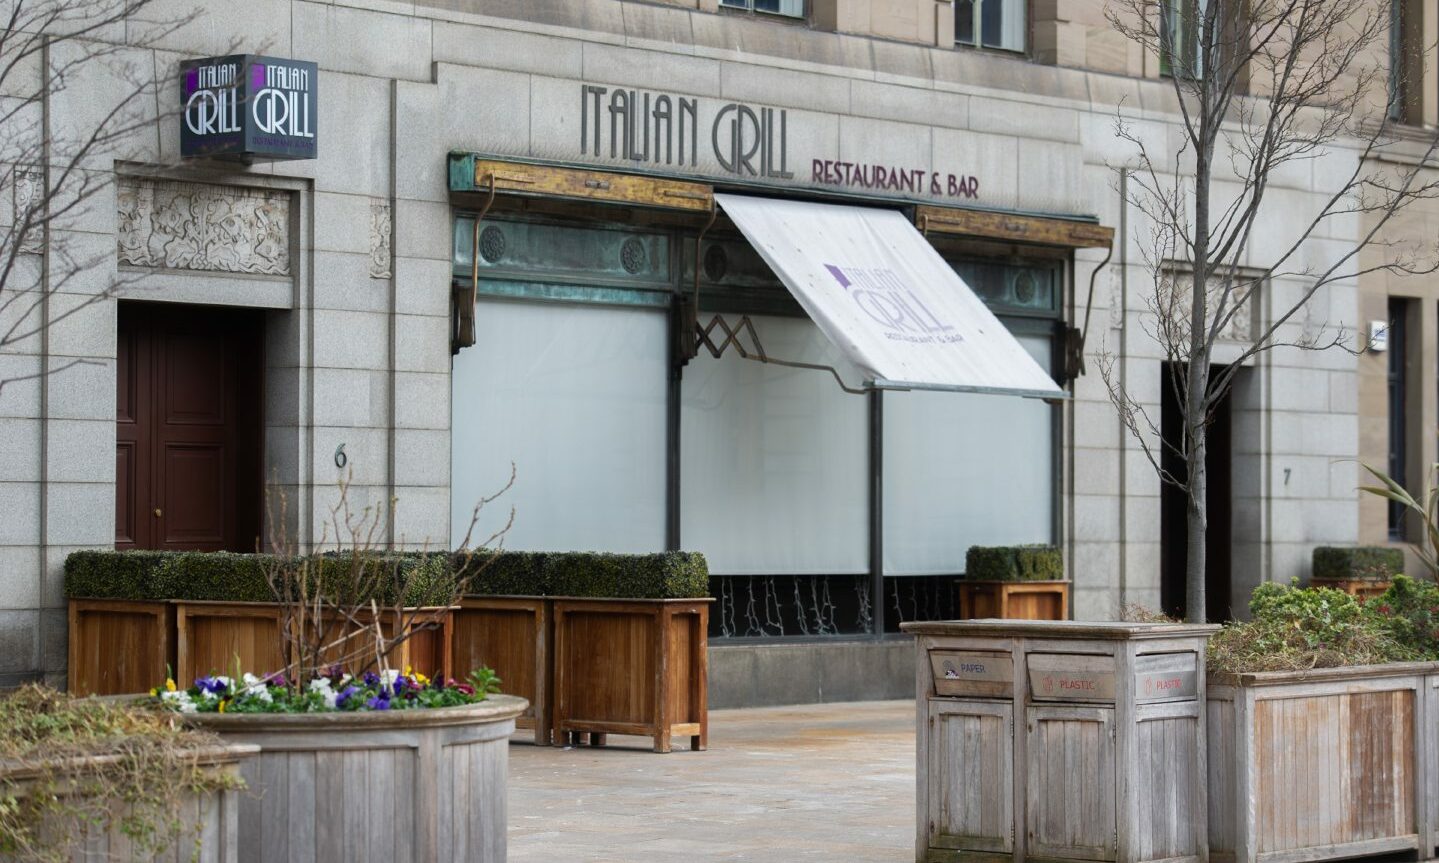 Italian Grill: Dundee centre restaurant shut this weekend